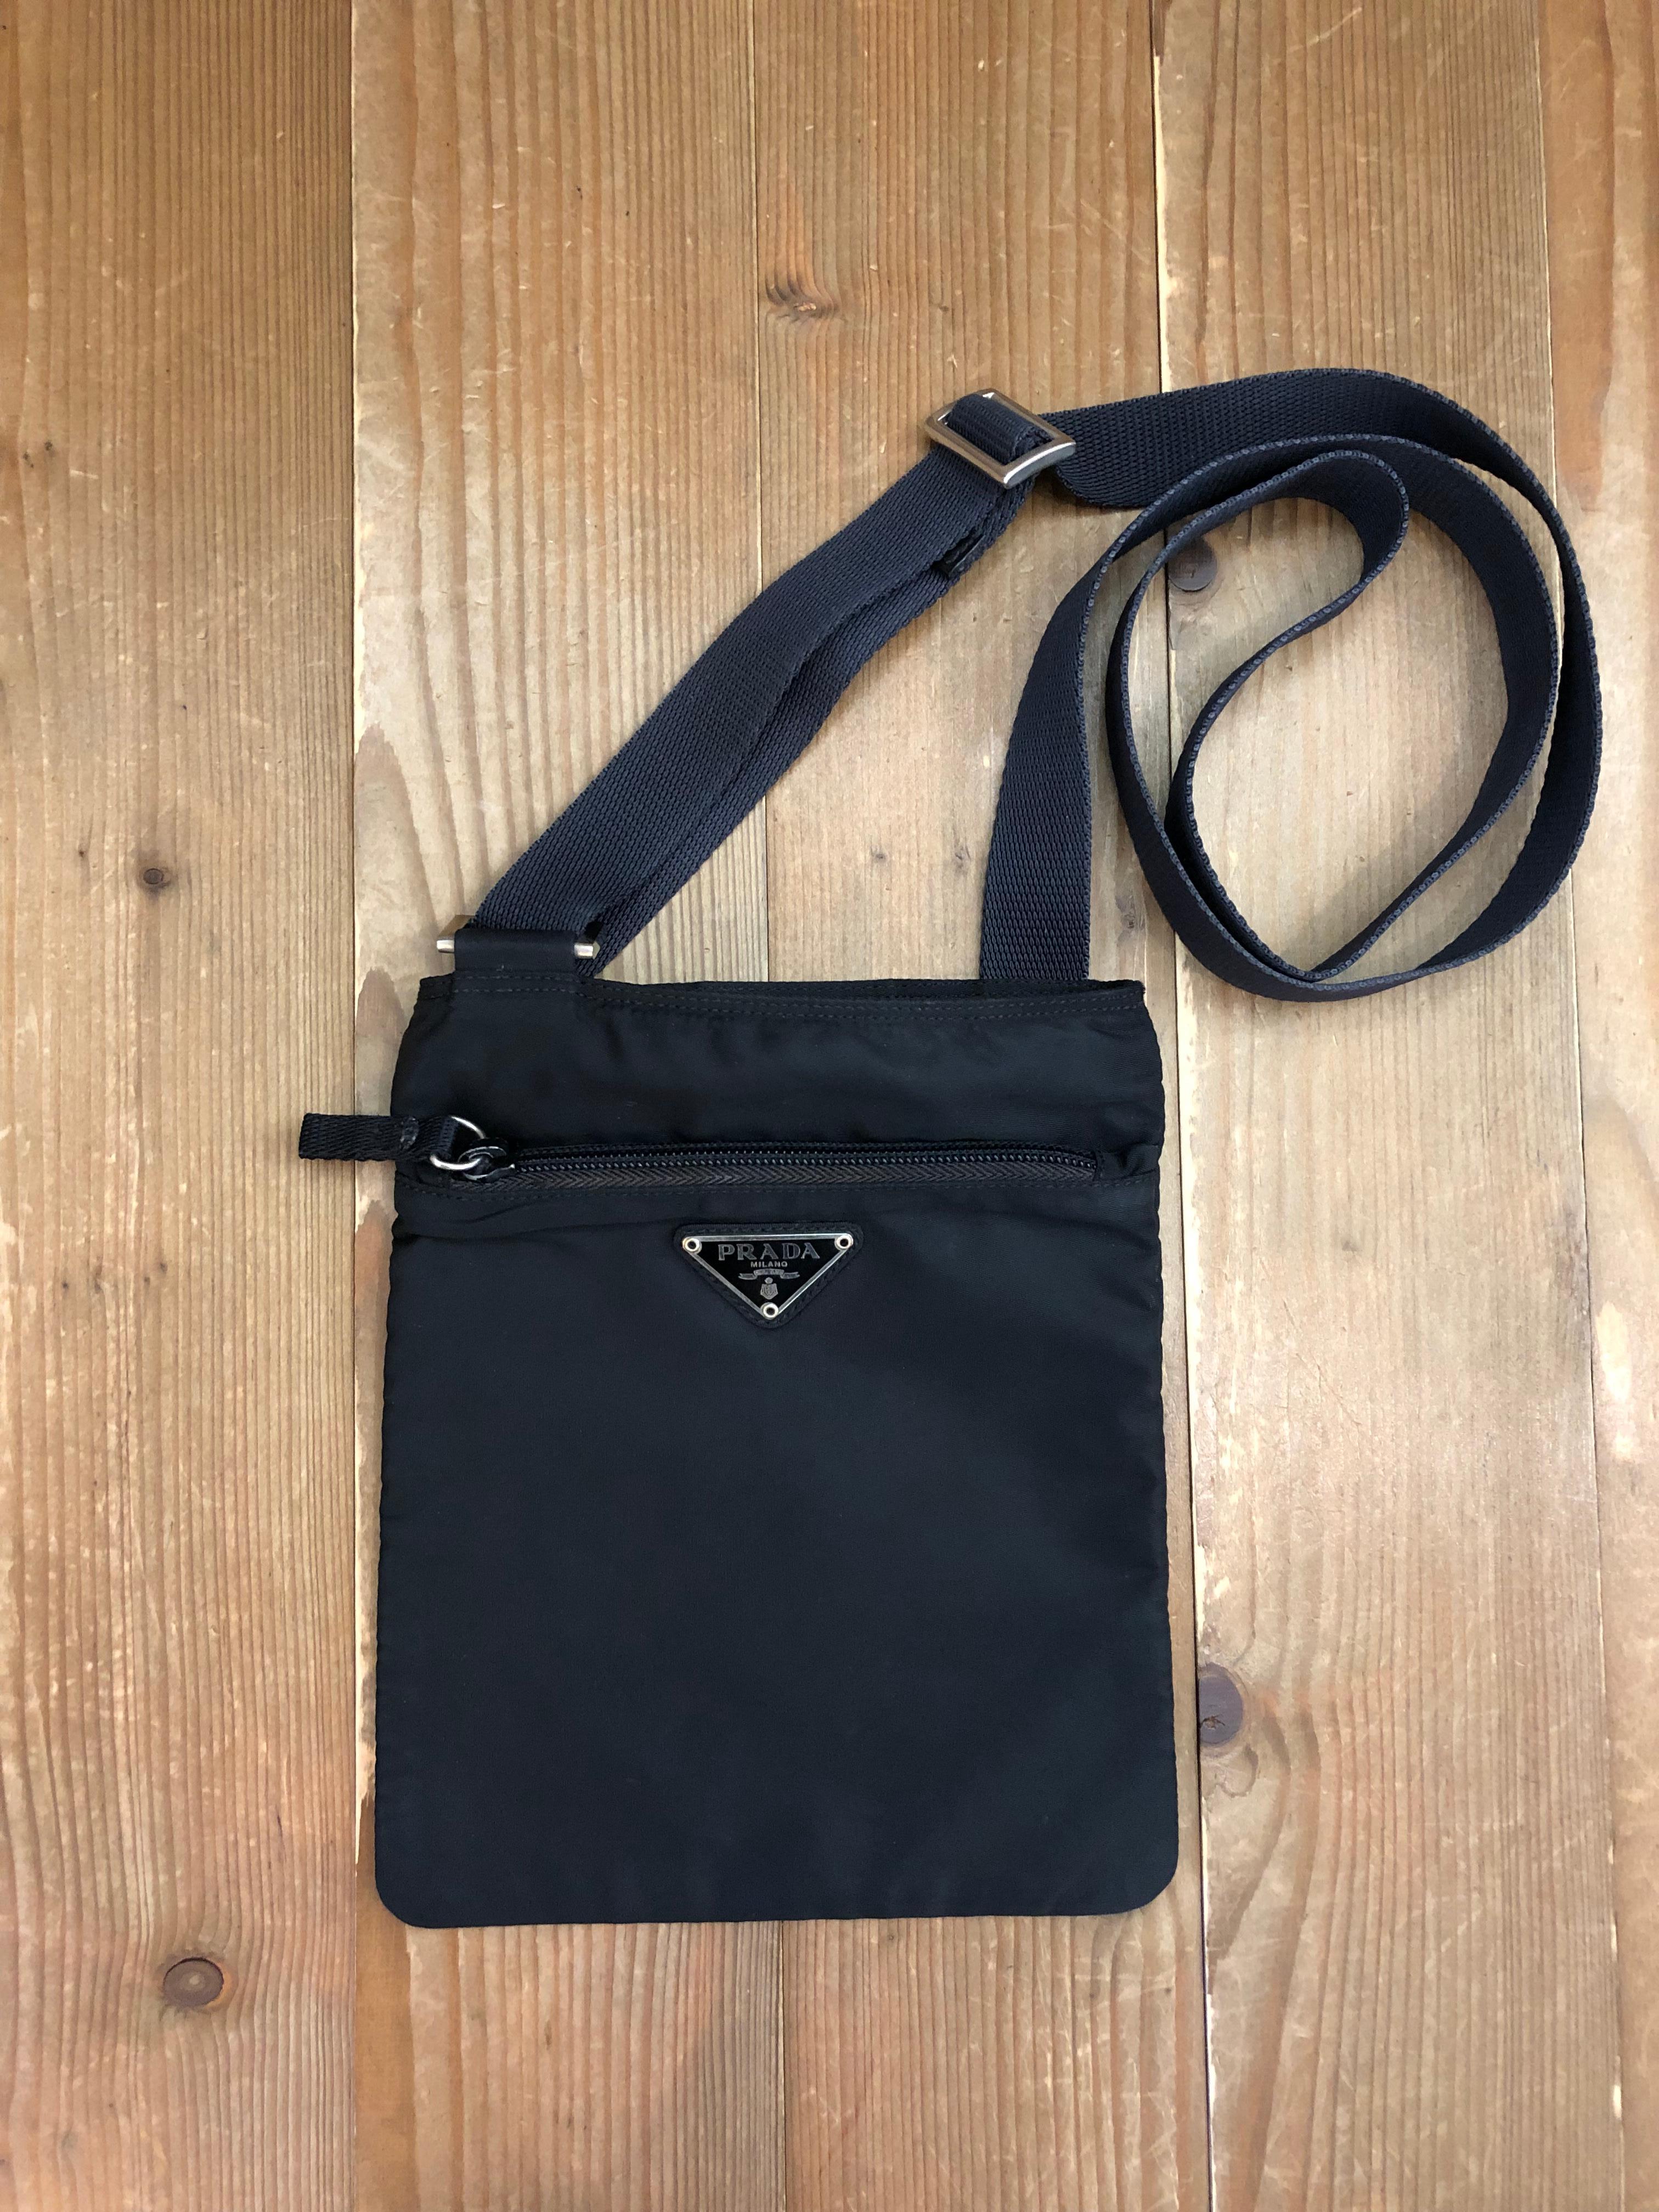 Mini Prada Milano Purple Ostrich Leather Micro Top Handle Bag Made